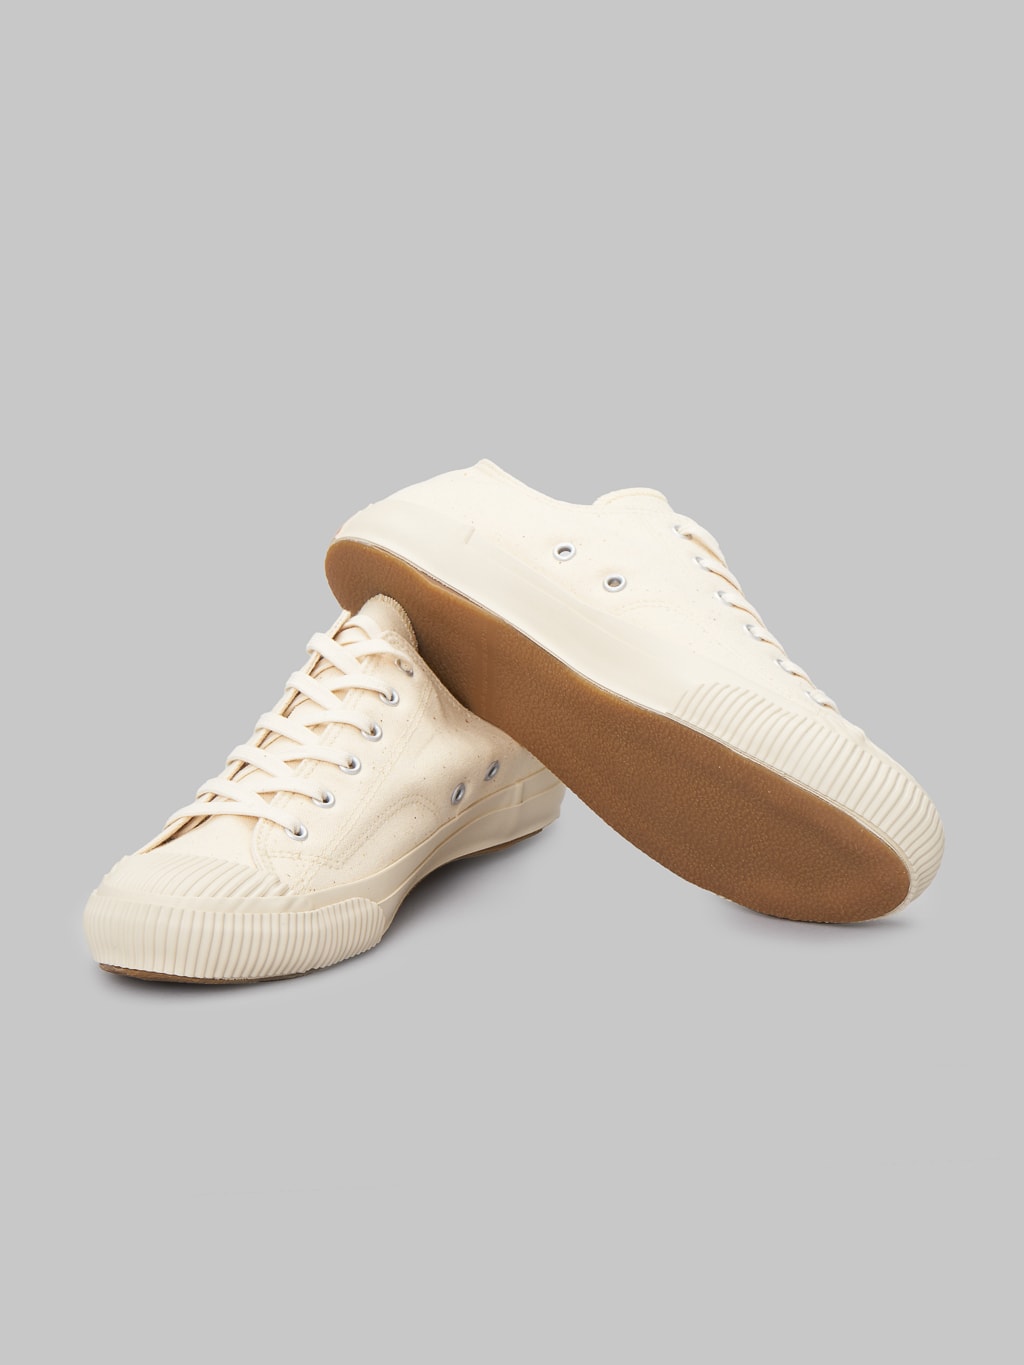 Pras Shellcap Low Sneakers Kinari off white rubber sole